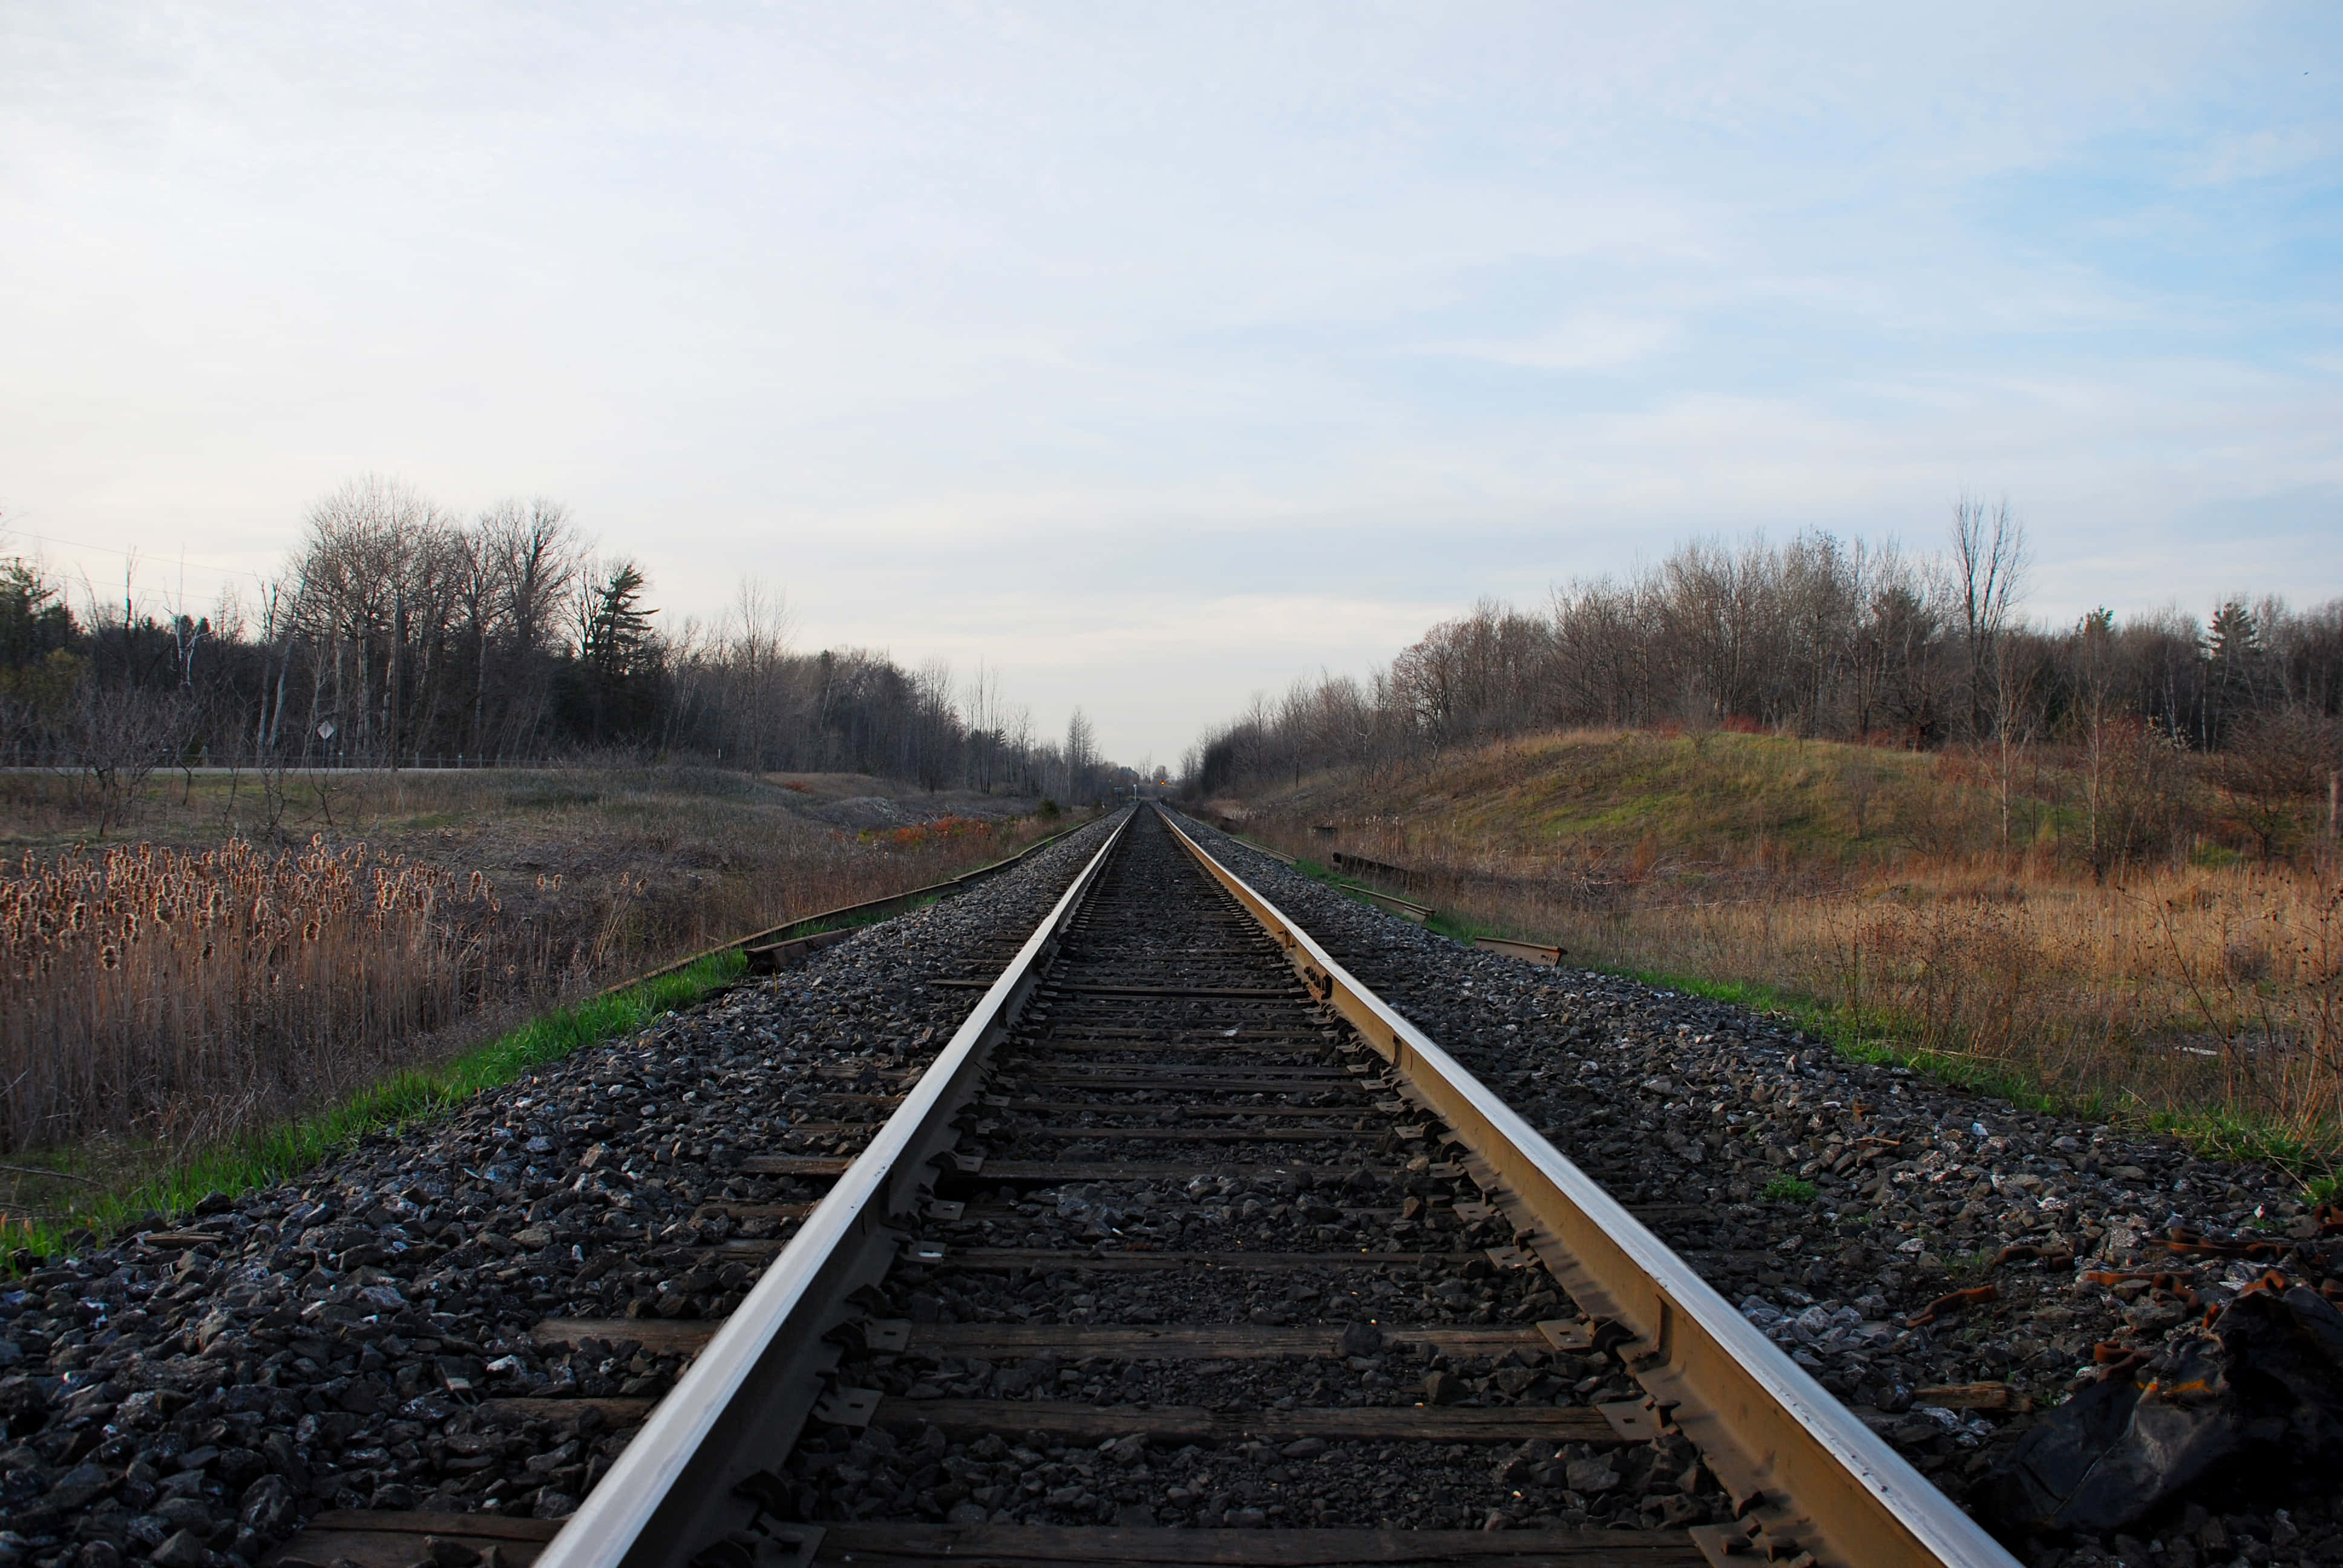 Exploring the Journey of Life Through Train Tracks